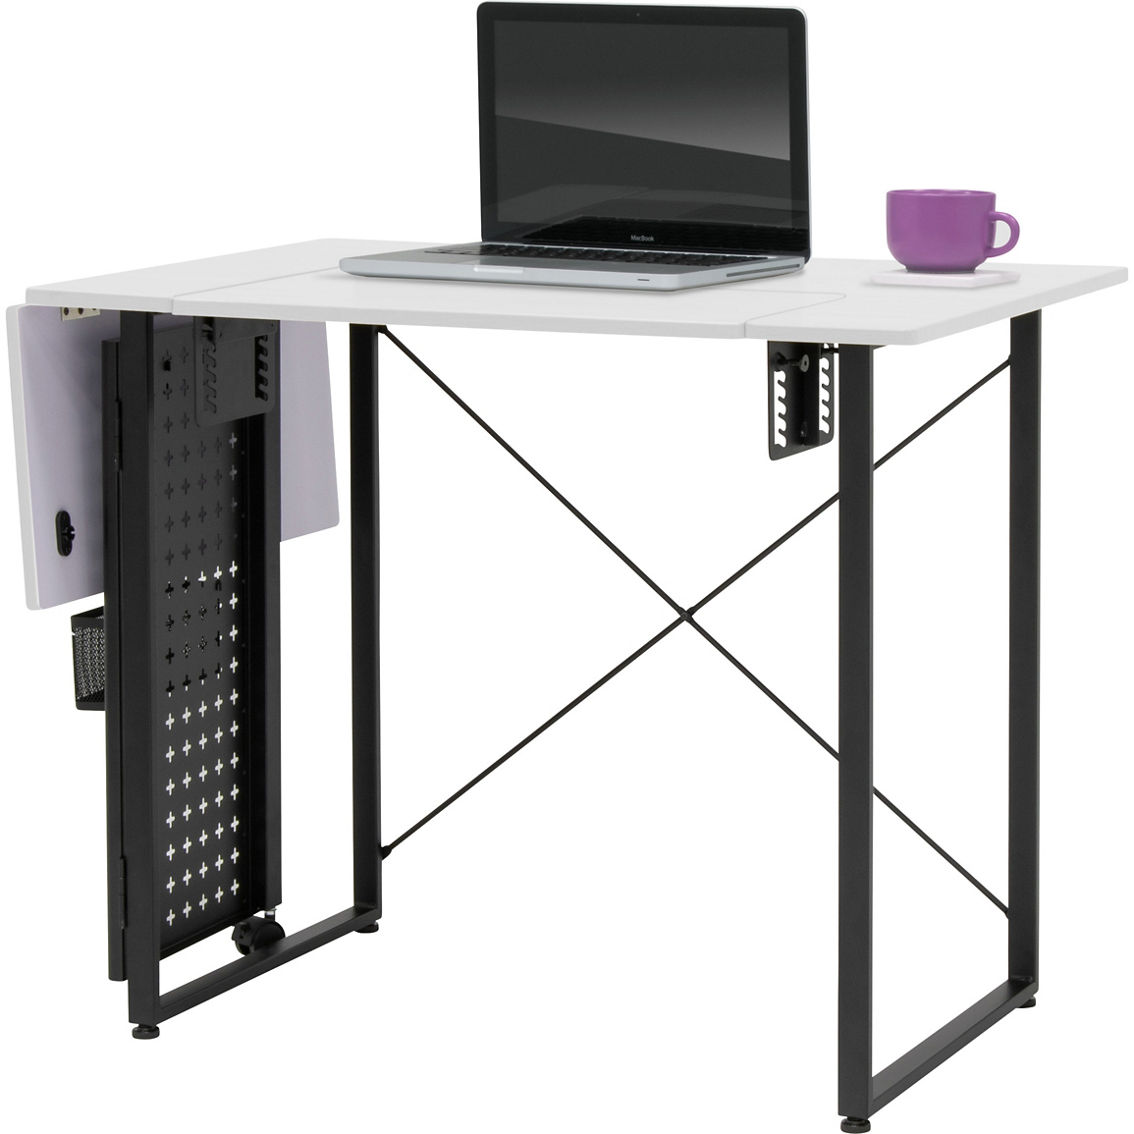 Studio Designs Pivot Panel Sewing Table, White - Image 5 of 9